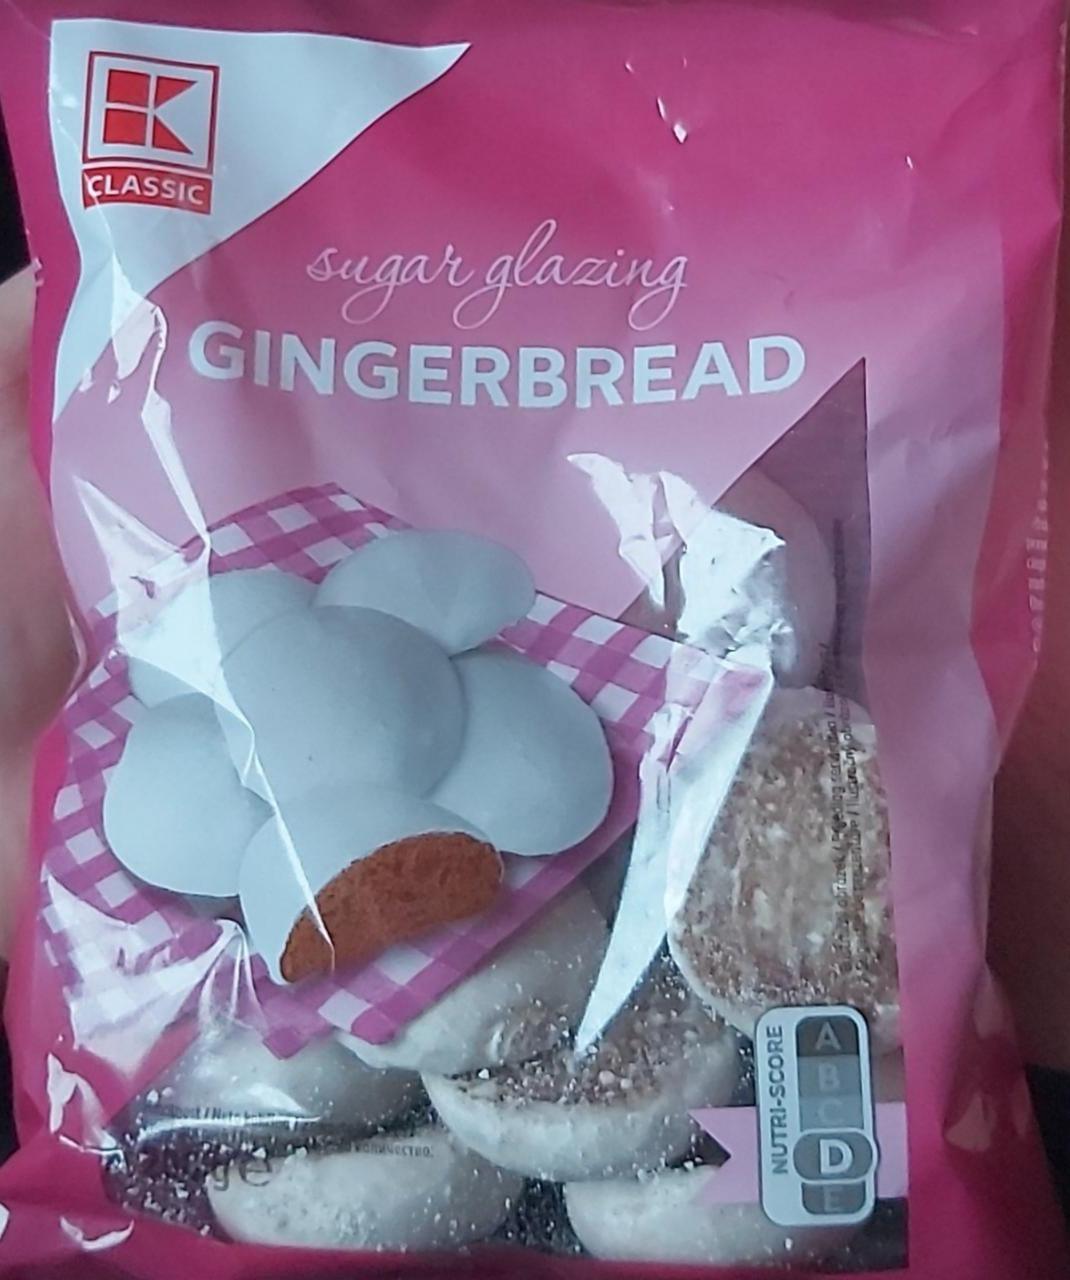 Fotografie - Gingerbread sugar glazing K-Classic